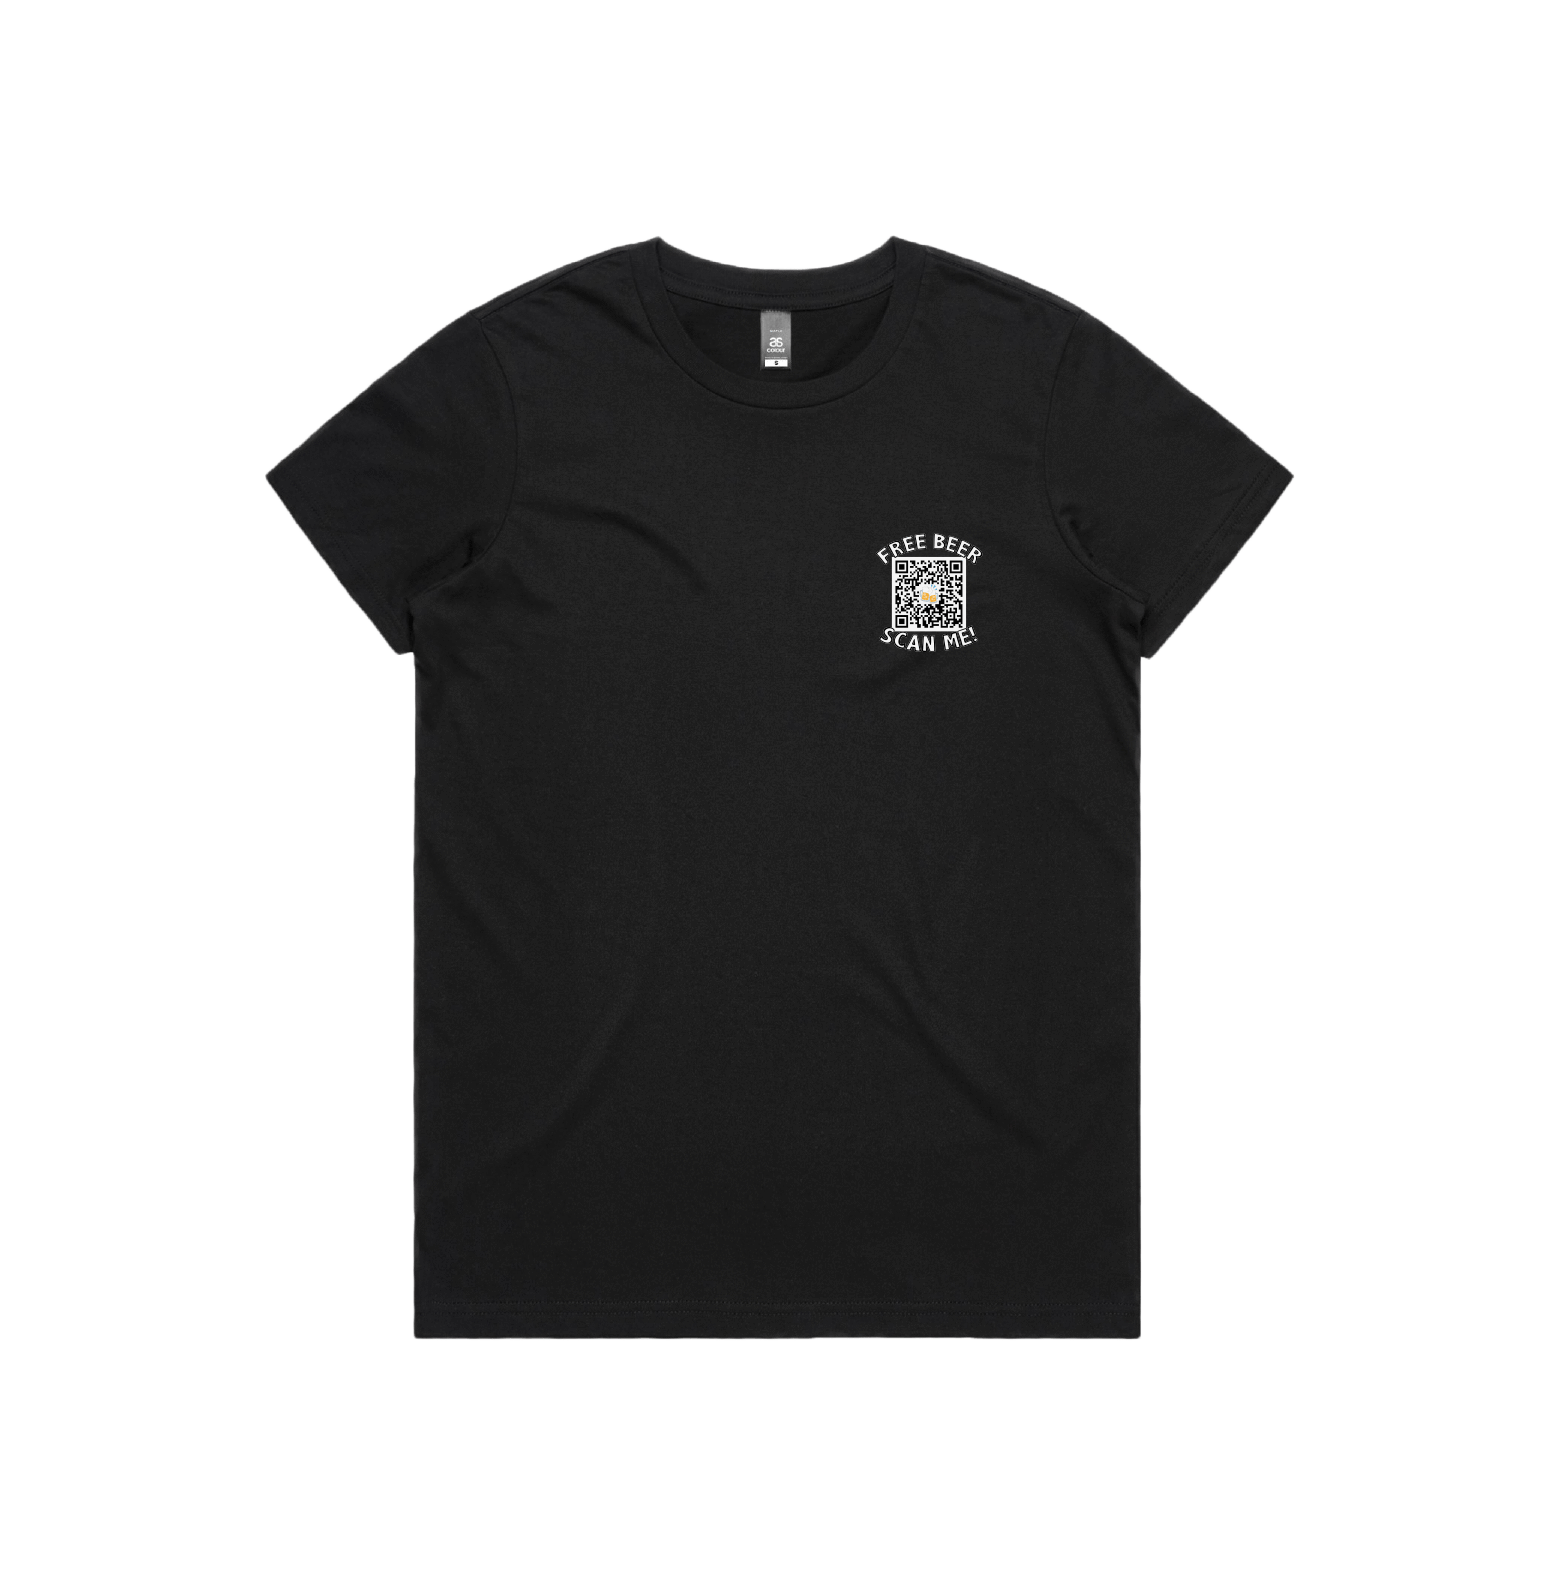 XS / Black / Small Front Design Rick Roll QR Prank 🎵 - Women's T Shirt